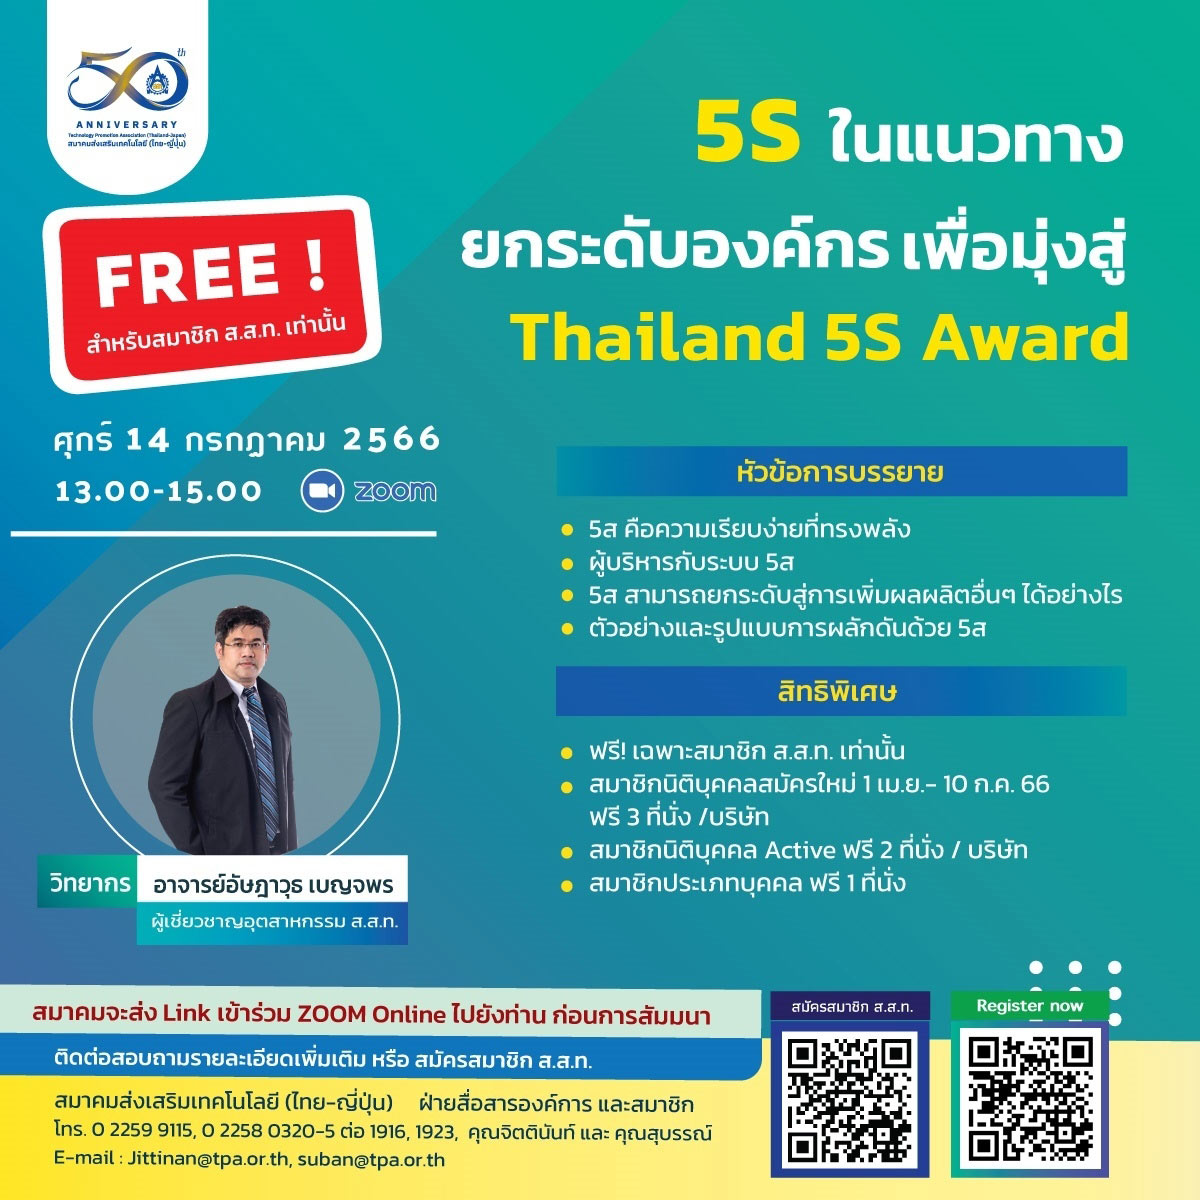 5s ในแนวทางยกระดับองค์กร เพื่อมุ่งสู่ Thailand 5s Award